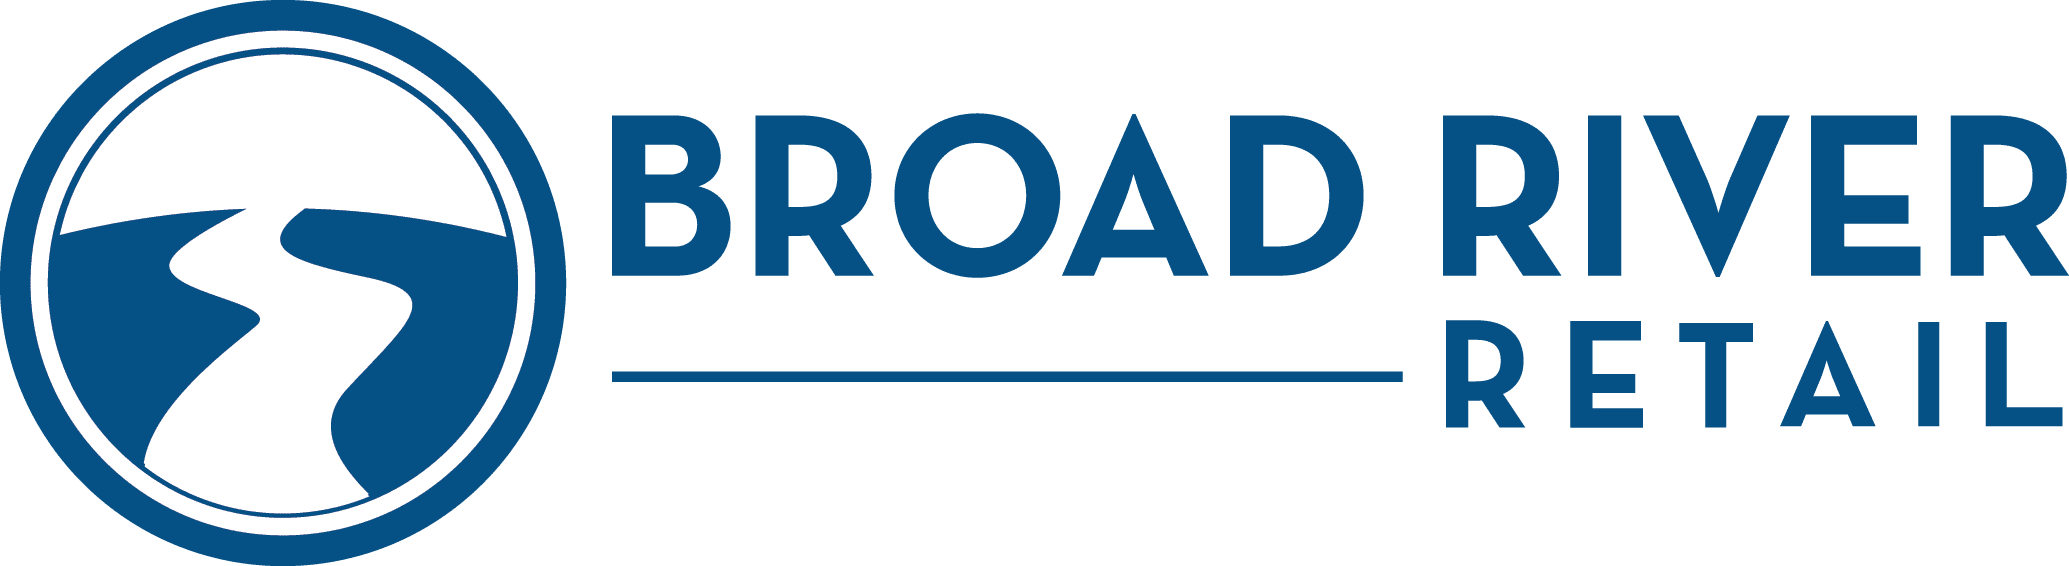 Broad River Retail Group logo